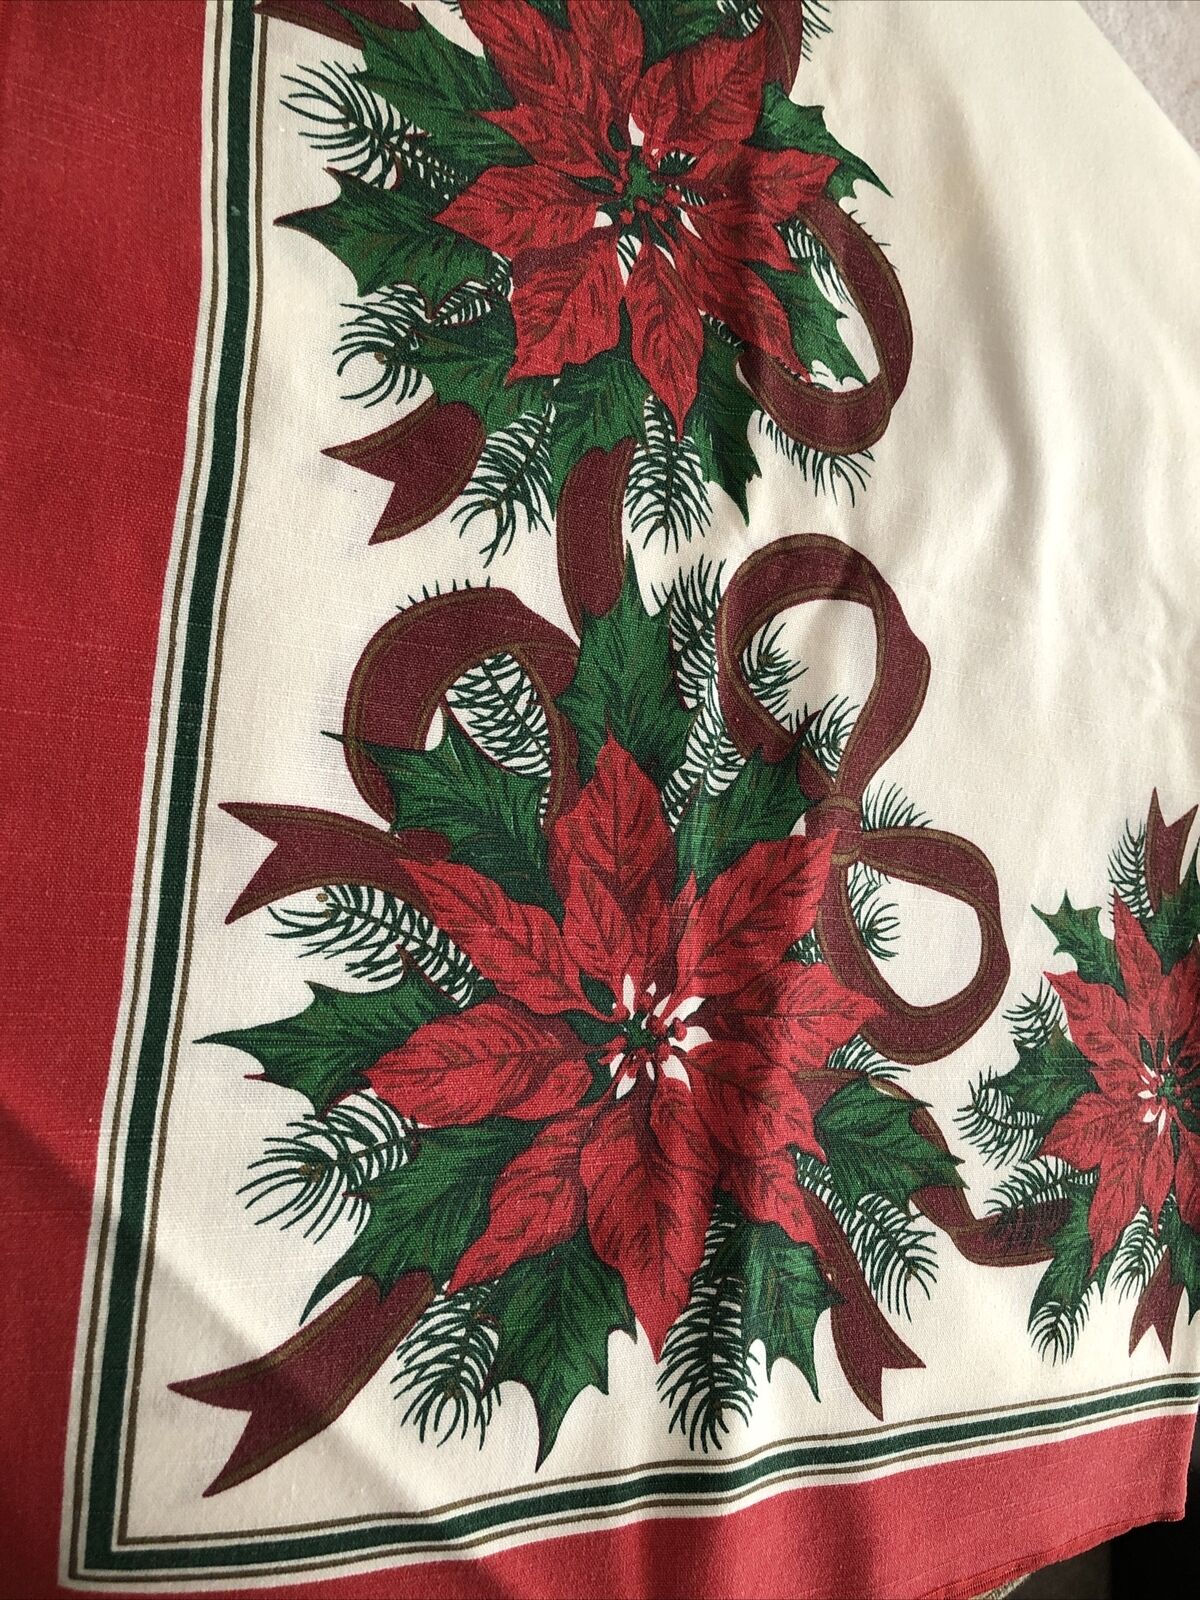 Christmas Tablecloth Vintage Linen 50x60 Rectangular Winter Poinsettias Vibrant